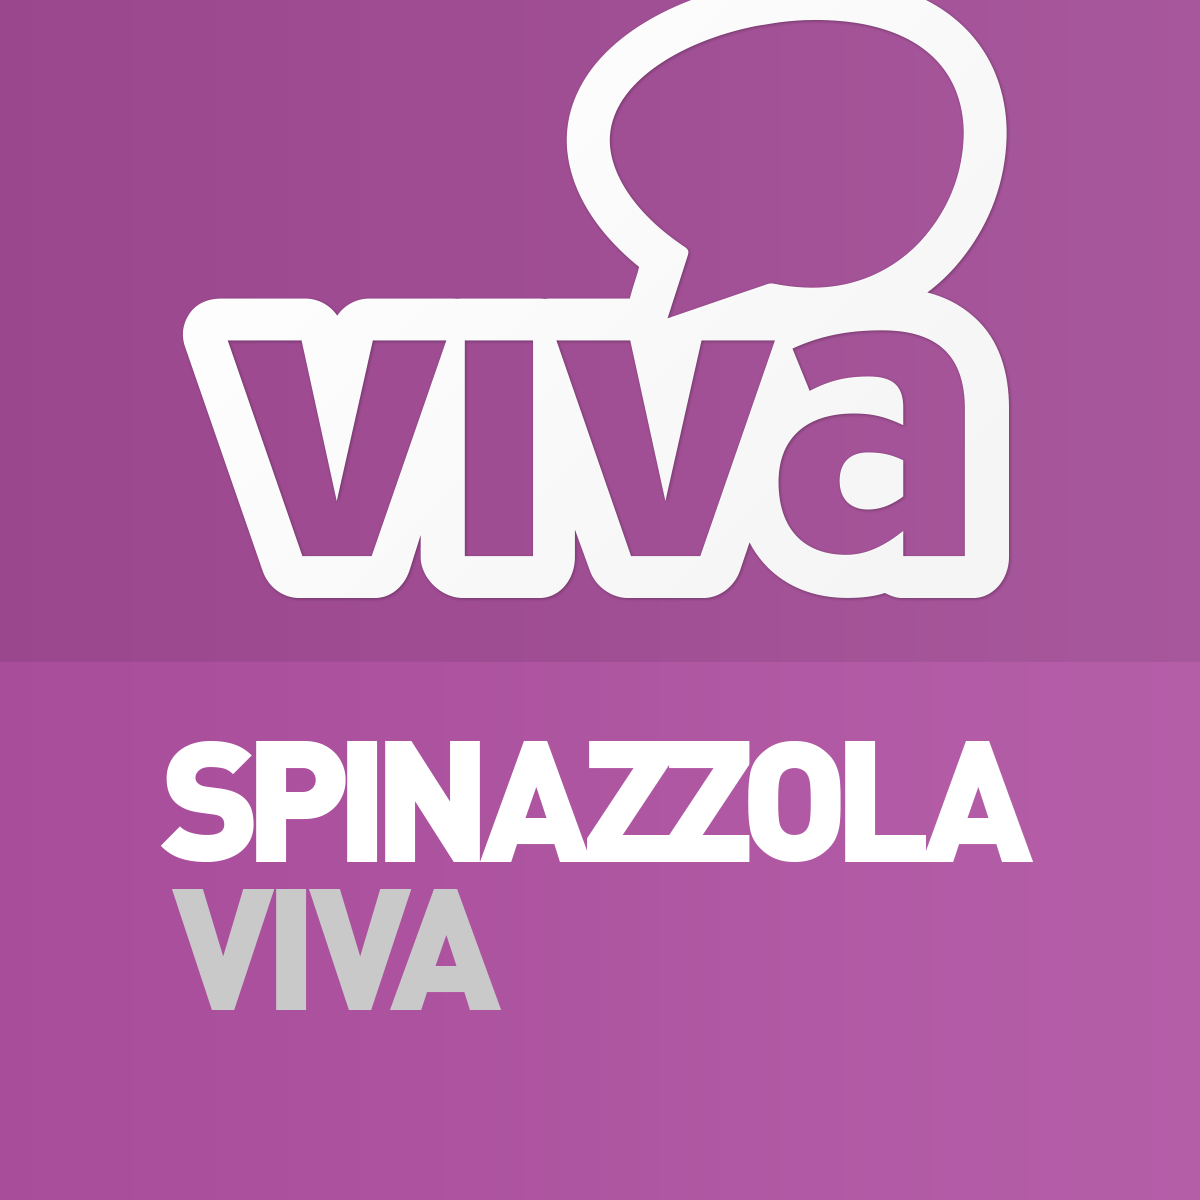 SpinazzolaViva